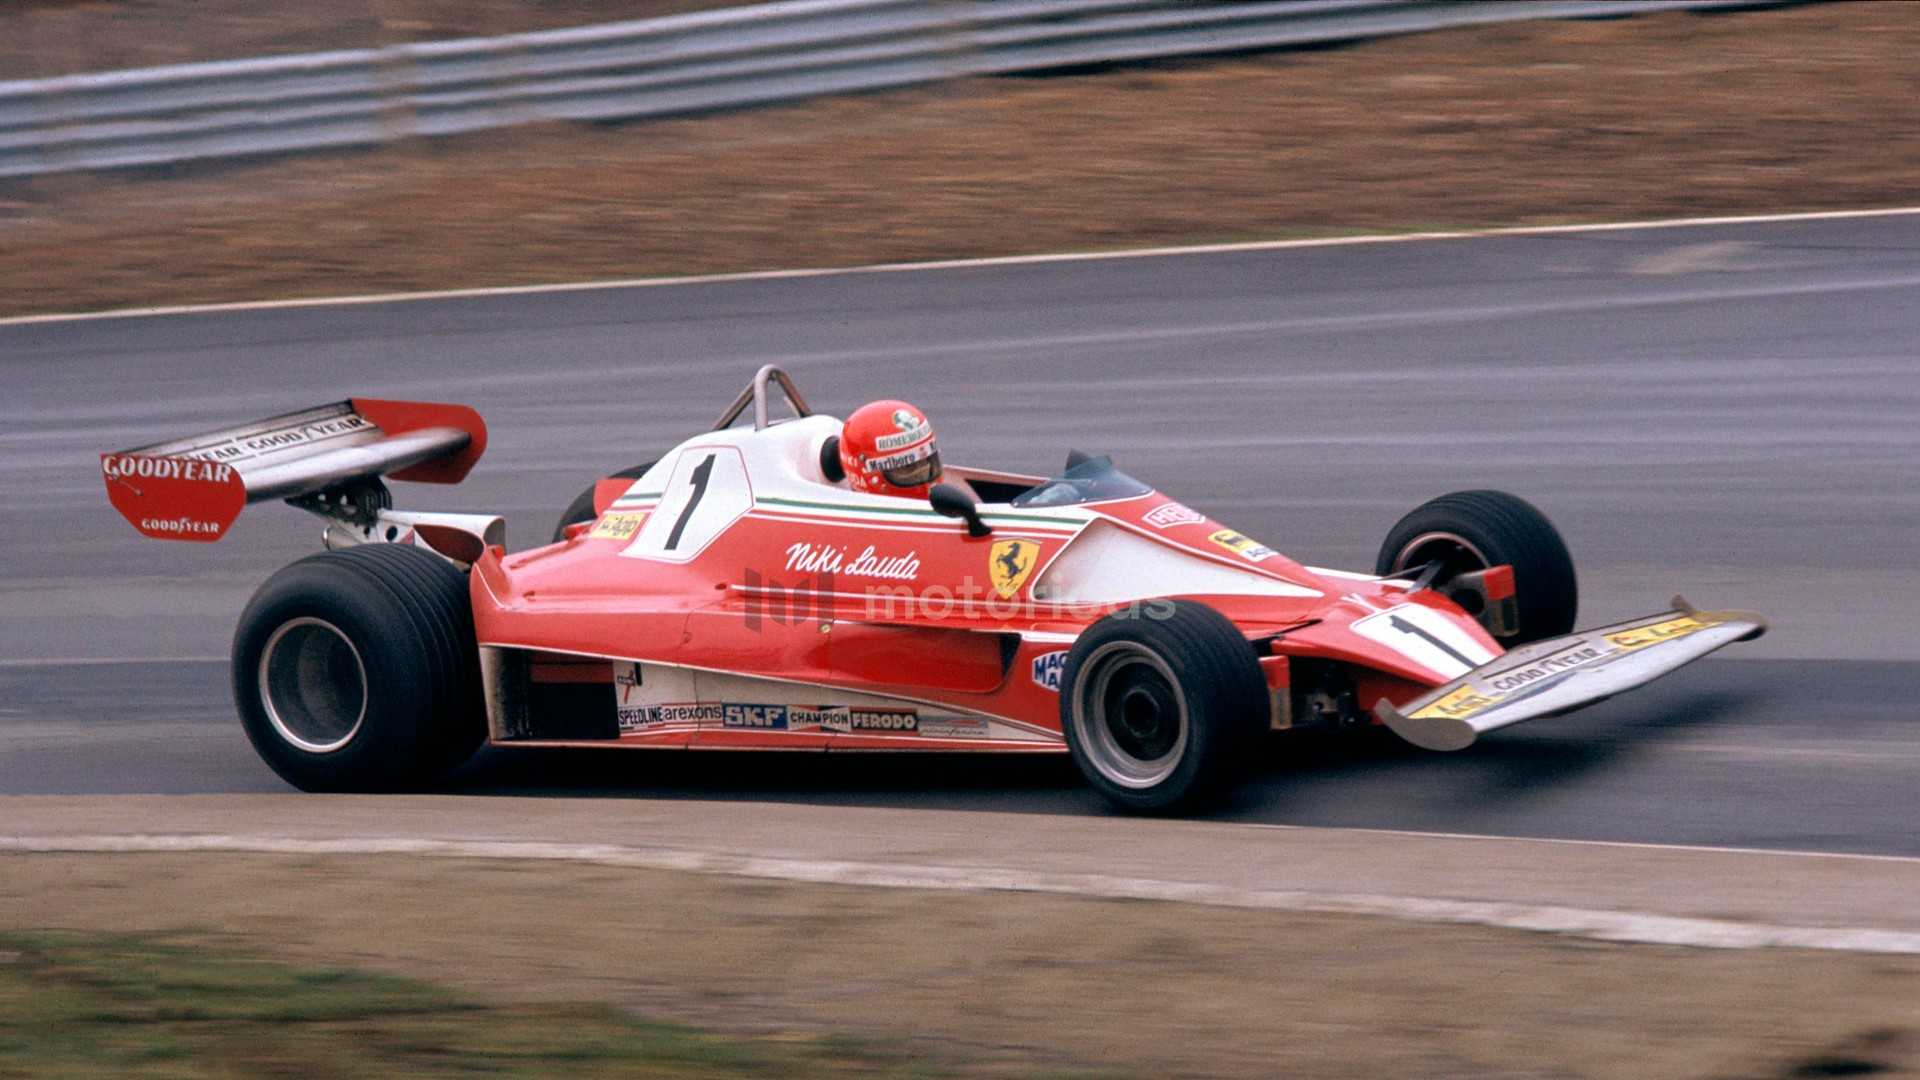 Mark Antar Design on Twitter Niki Lauda phone wallpaper Enjoy   nikilauda f1 formula1 httpstcoSHnjtJAz7n  Twitter